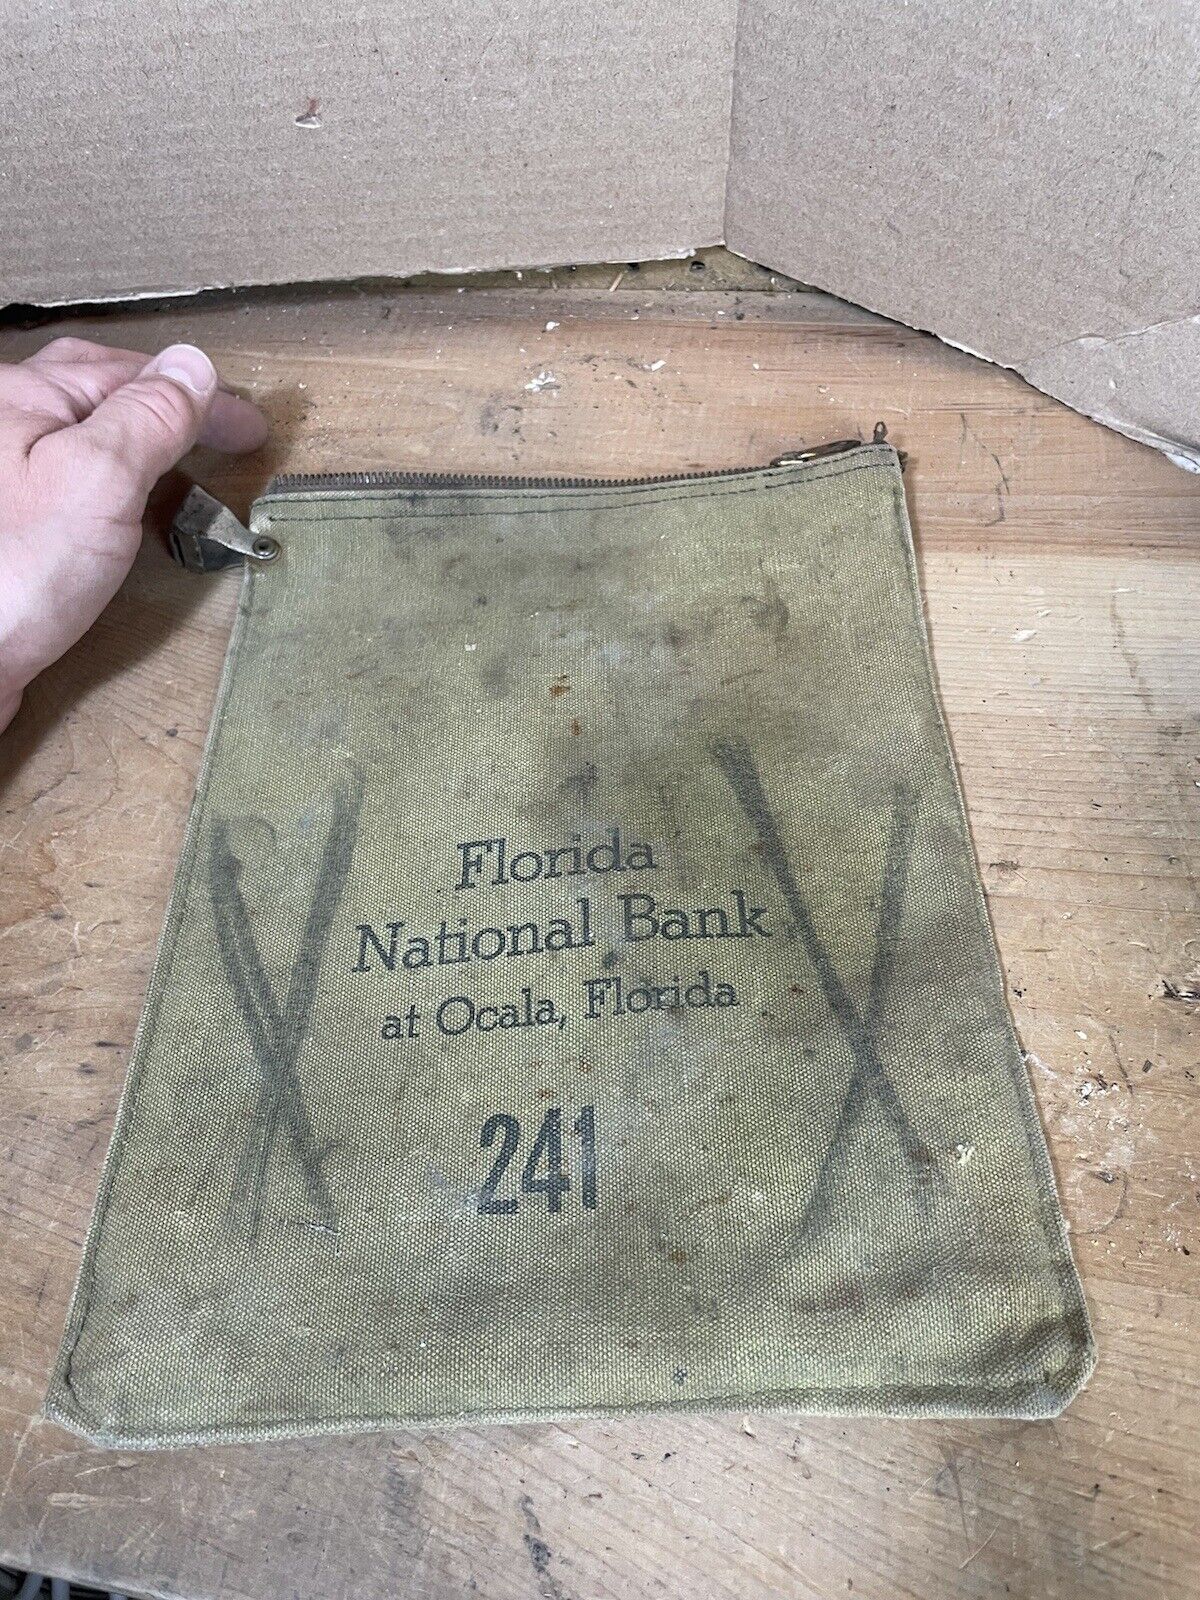 Vintage Bank Money Bag Florida National Bank At Ocala Florida Deposit